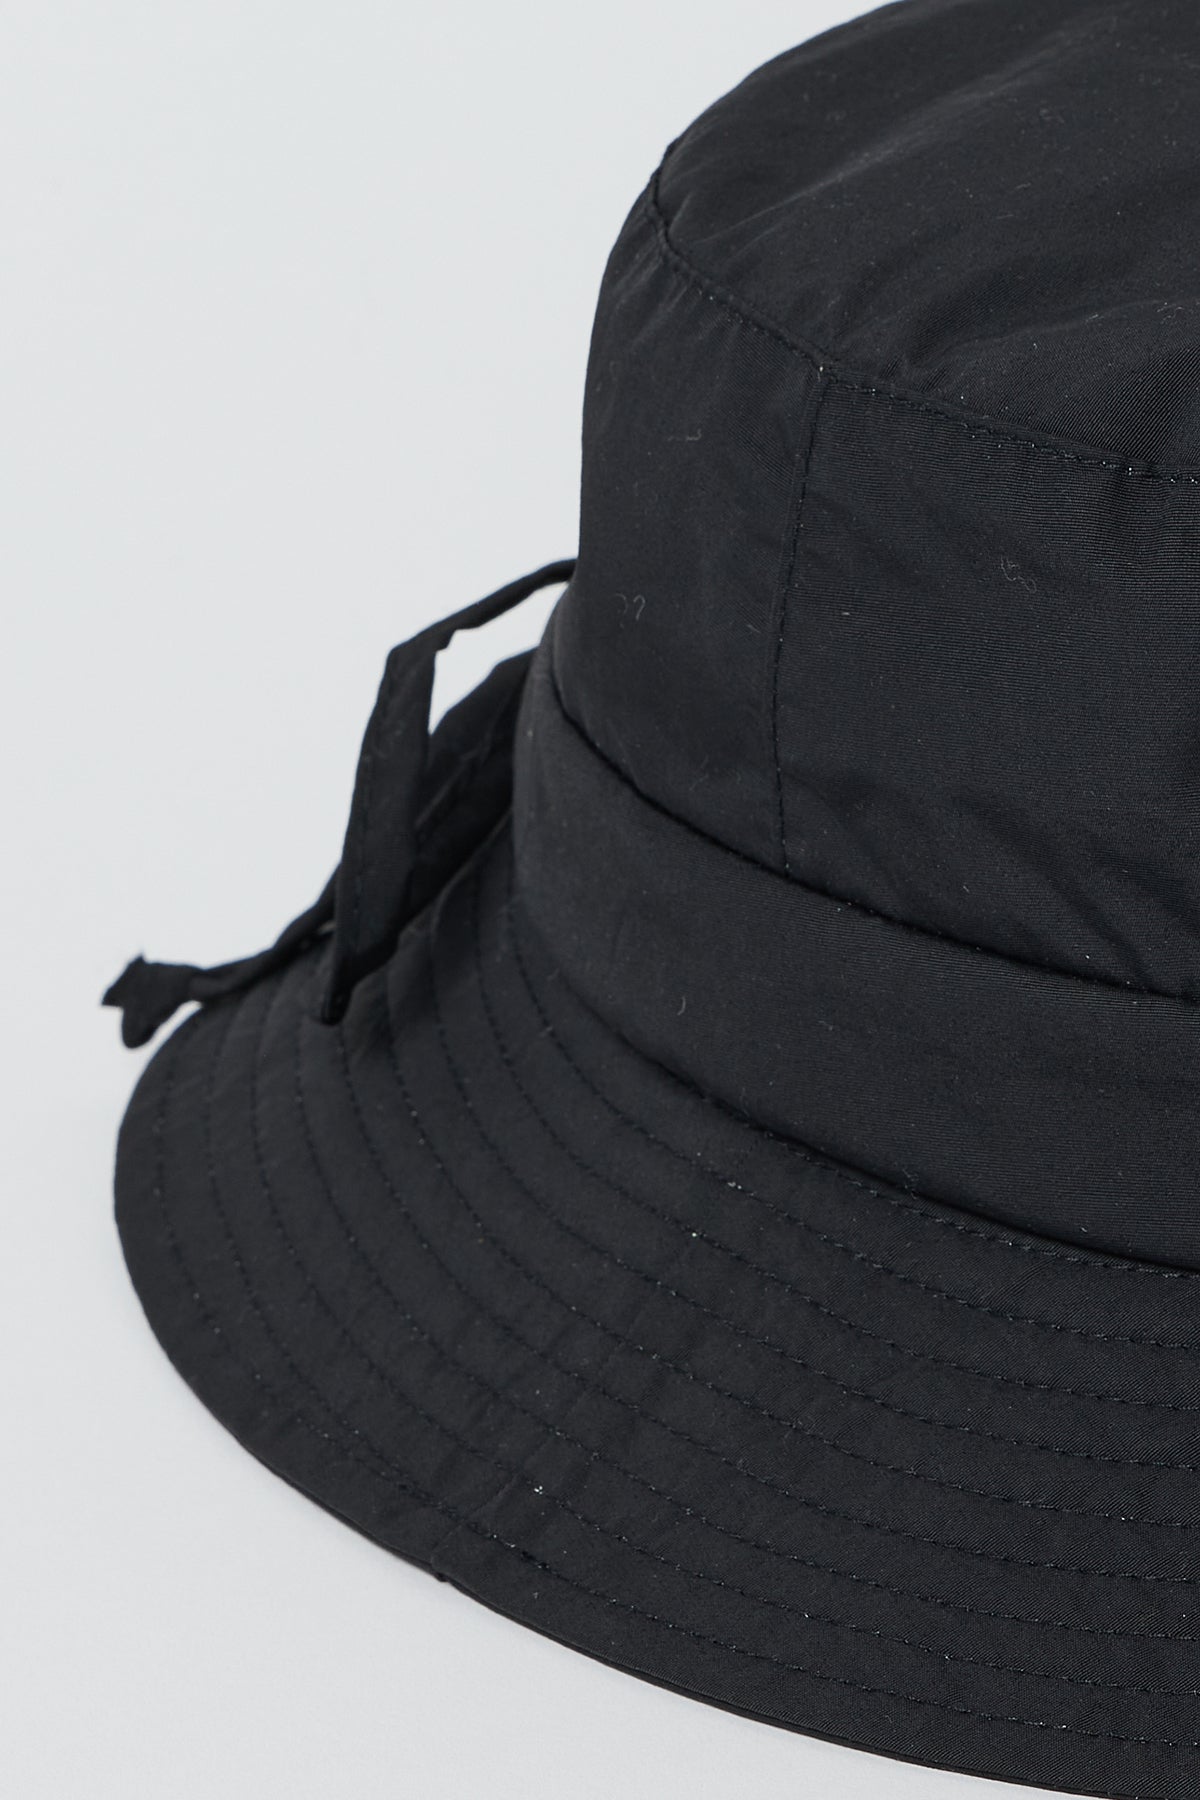 Black Rain Hat close up detail-26749522804929